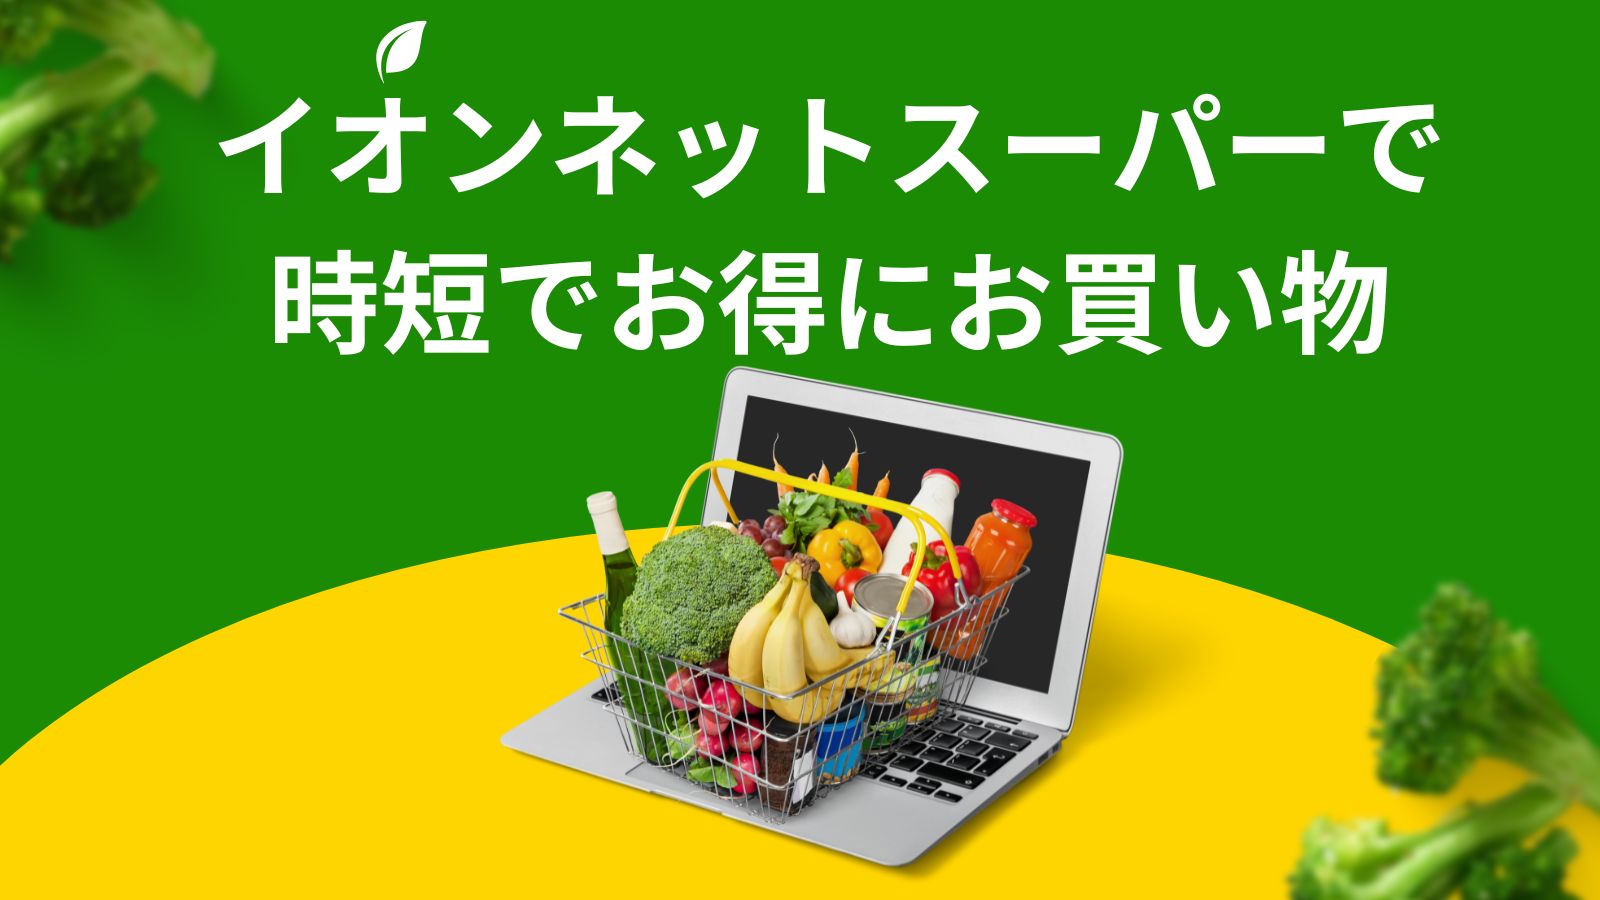 net-supermarket-image